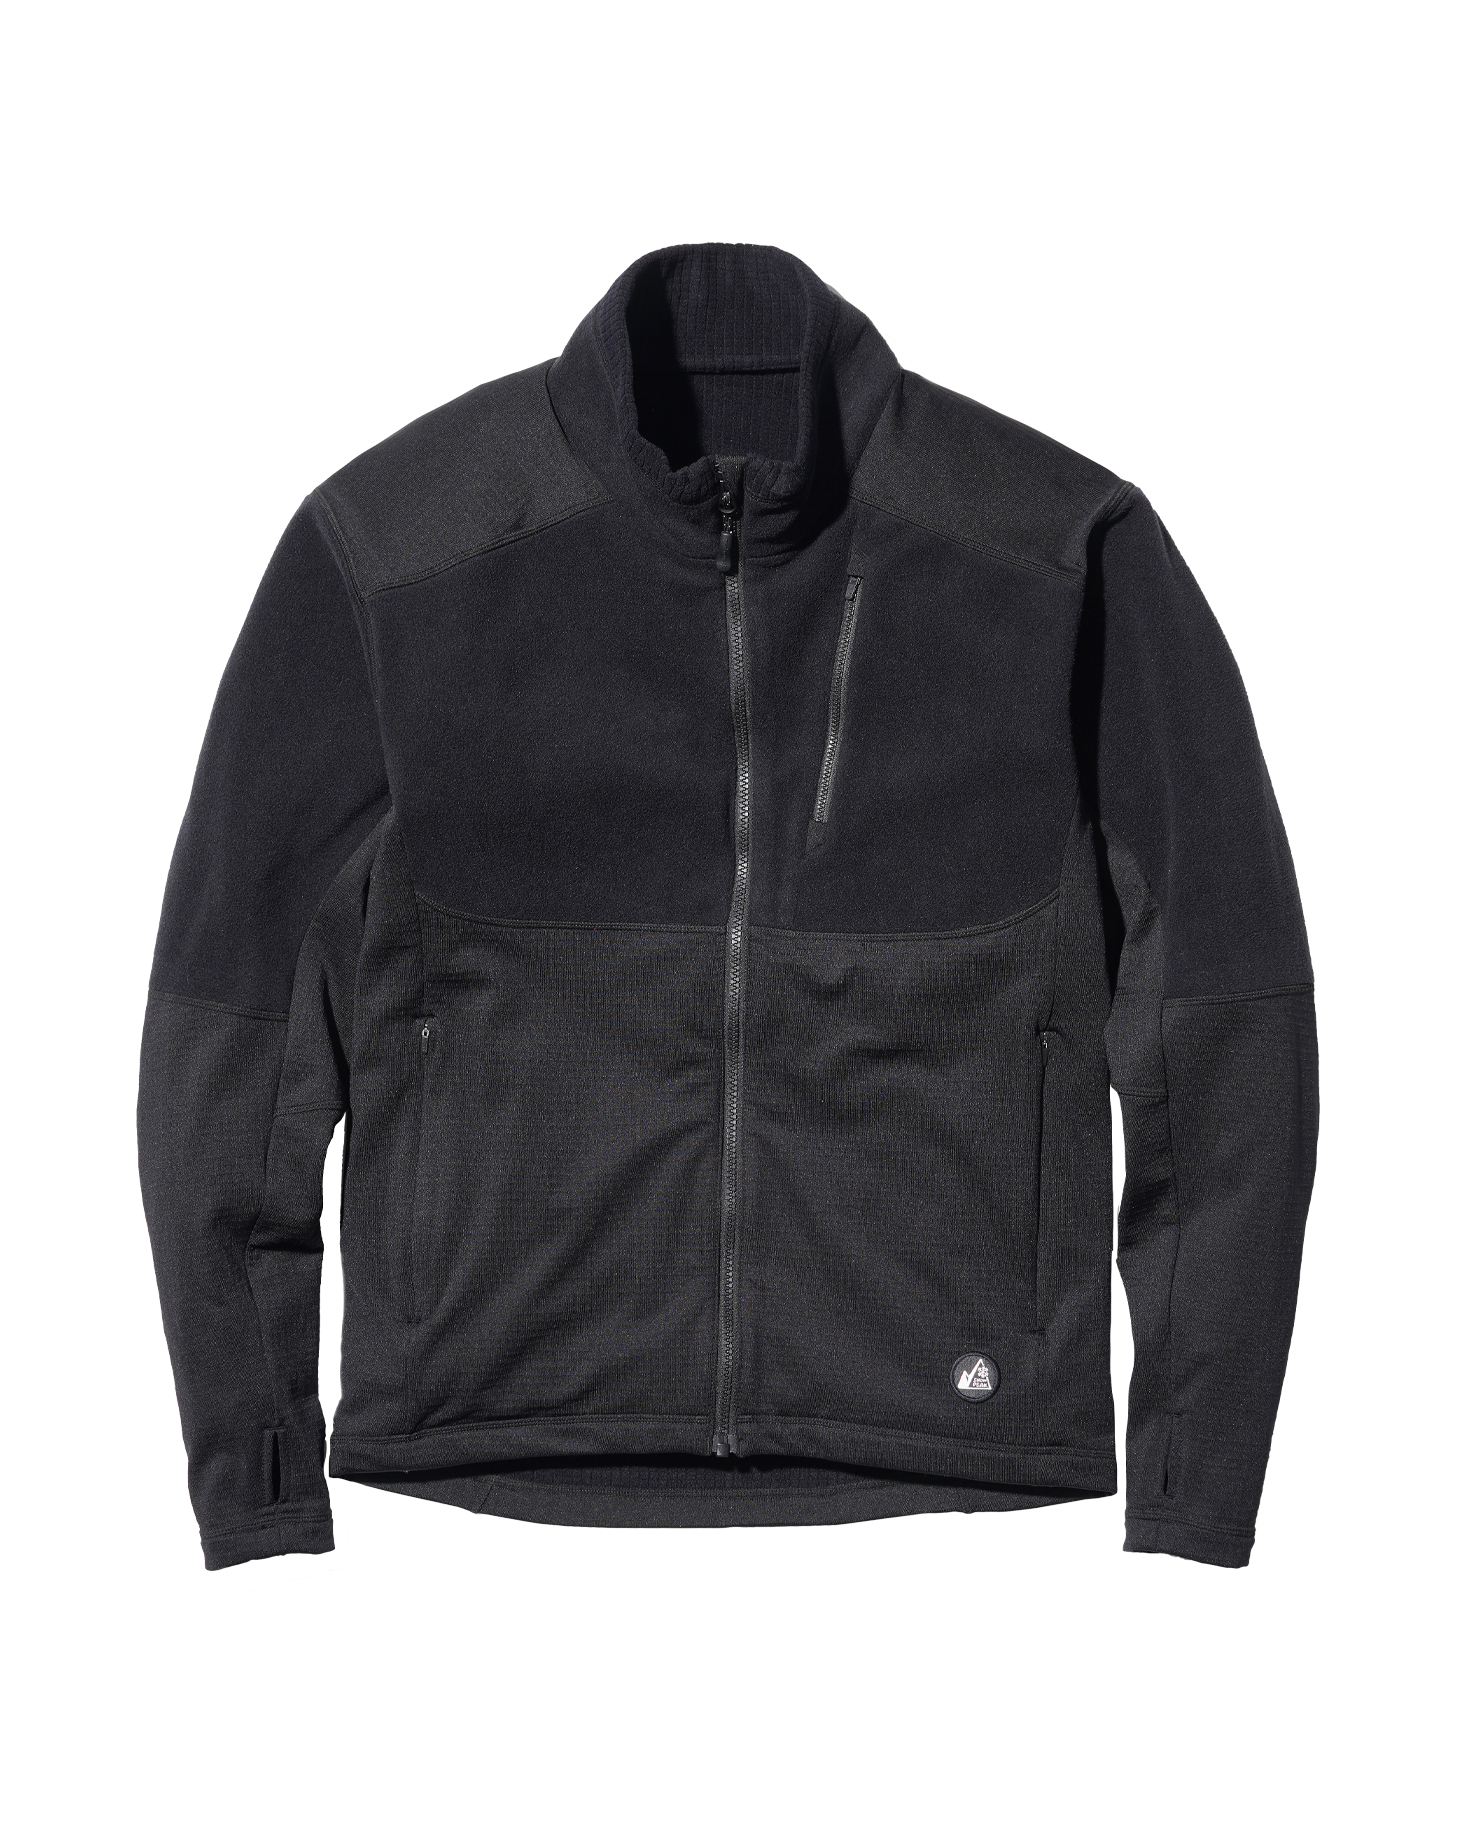 Snow Peak Micro Fleece Jacket / Grey